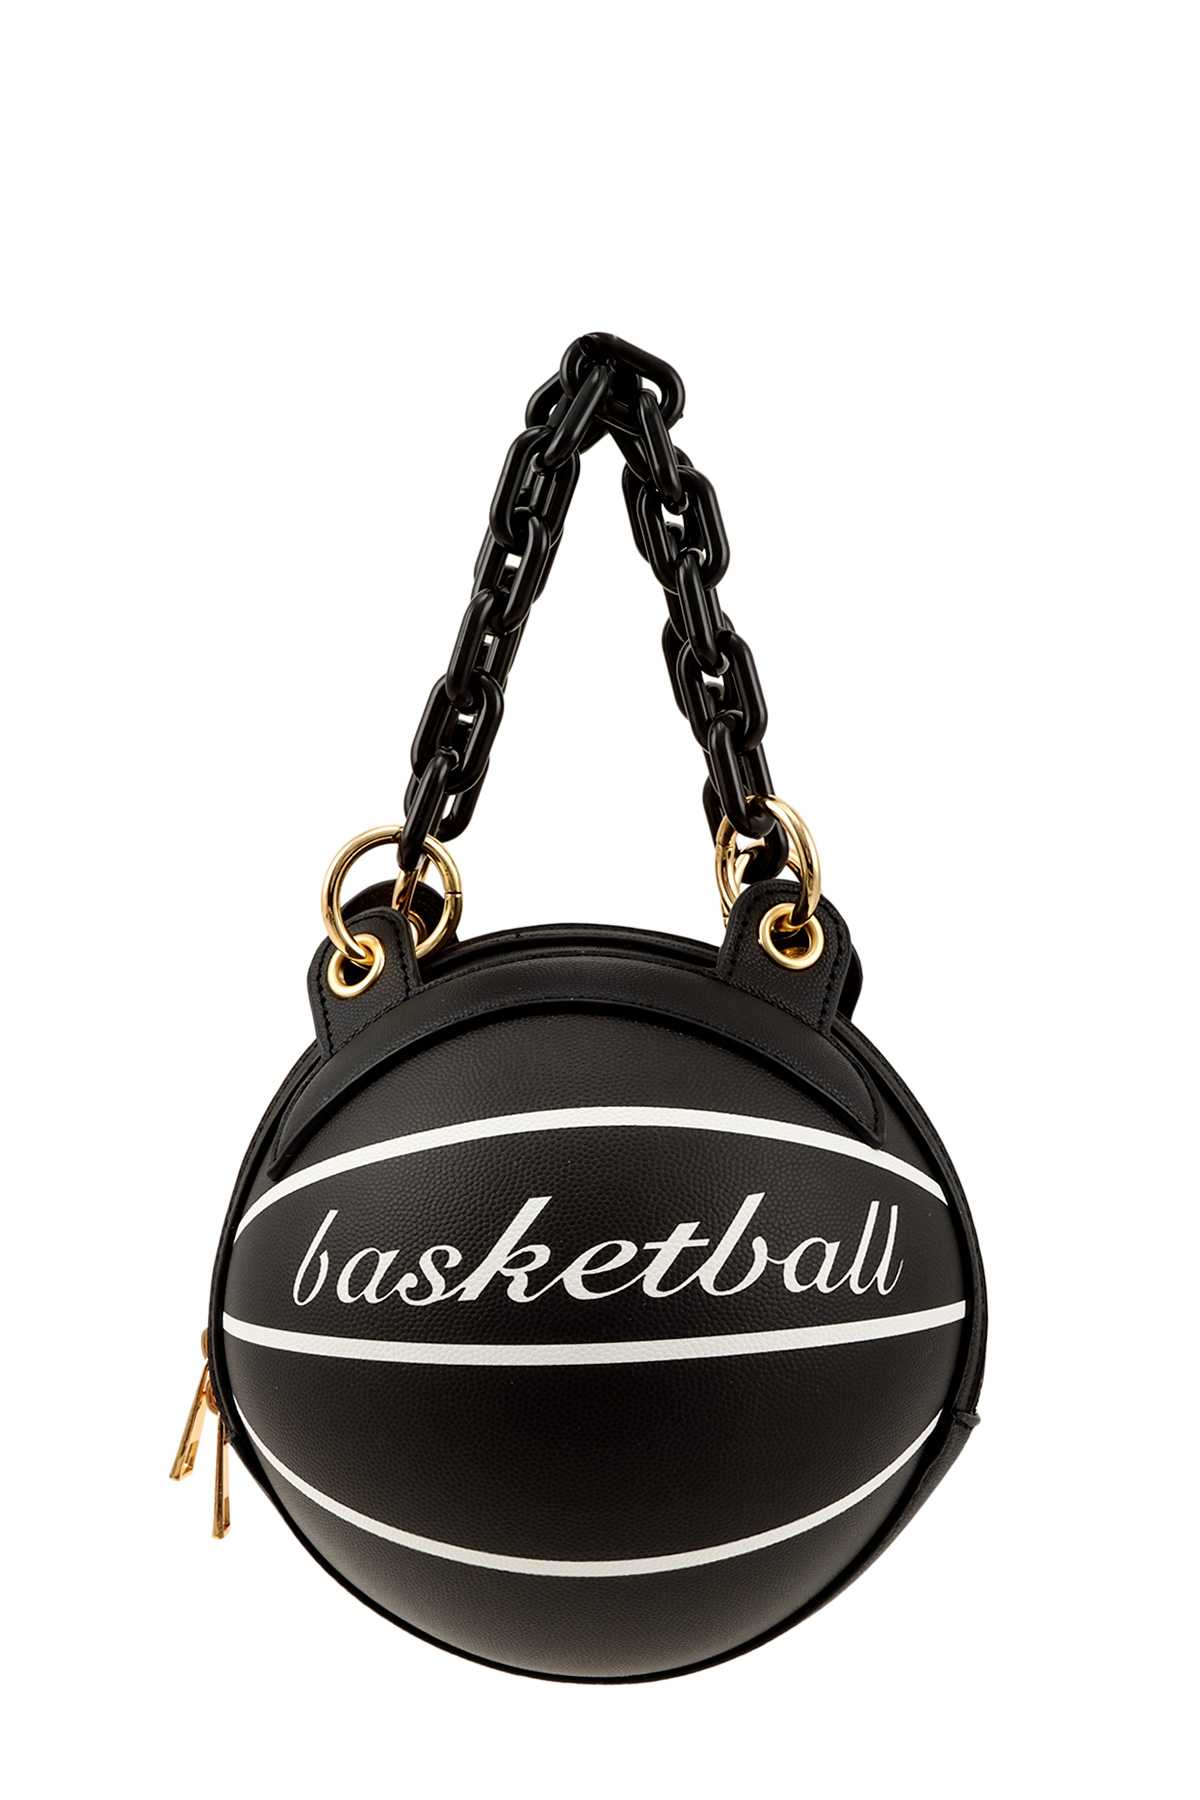 Basket Ball Shape Crossbody Bag